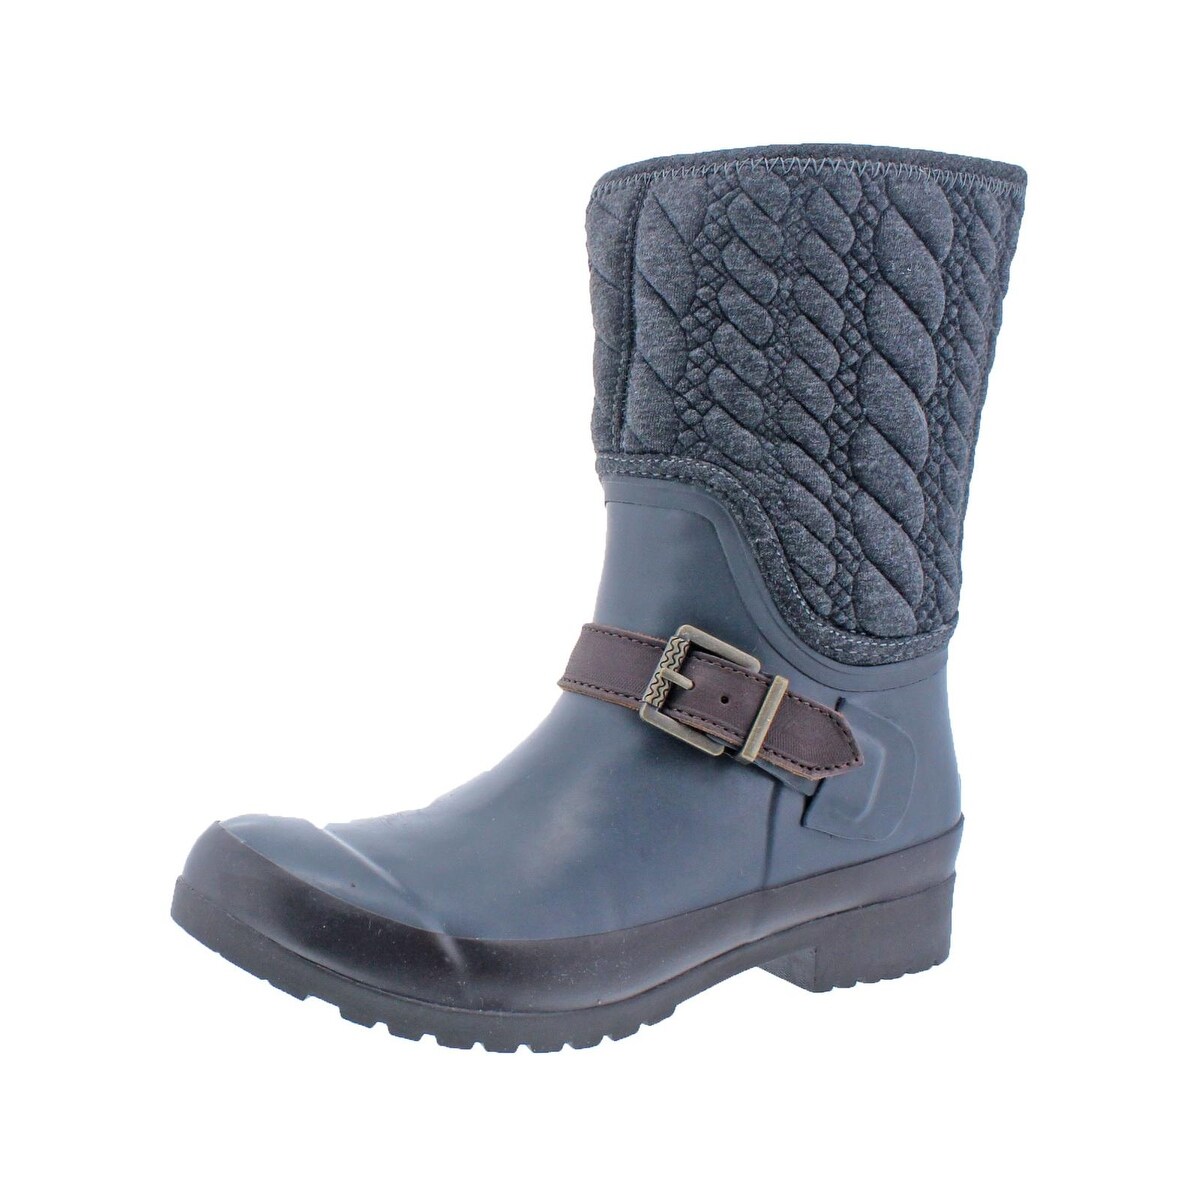 sperry waterproof rain boots